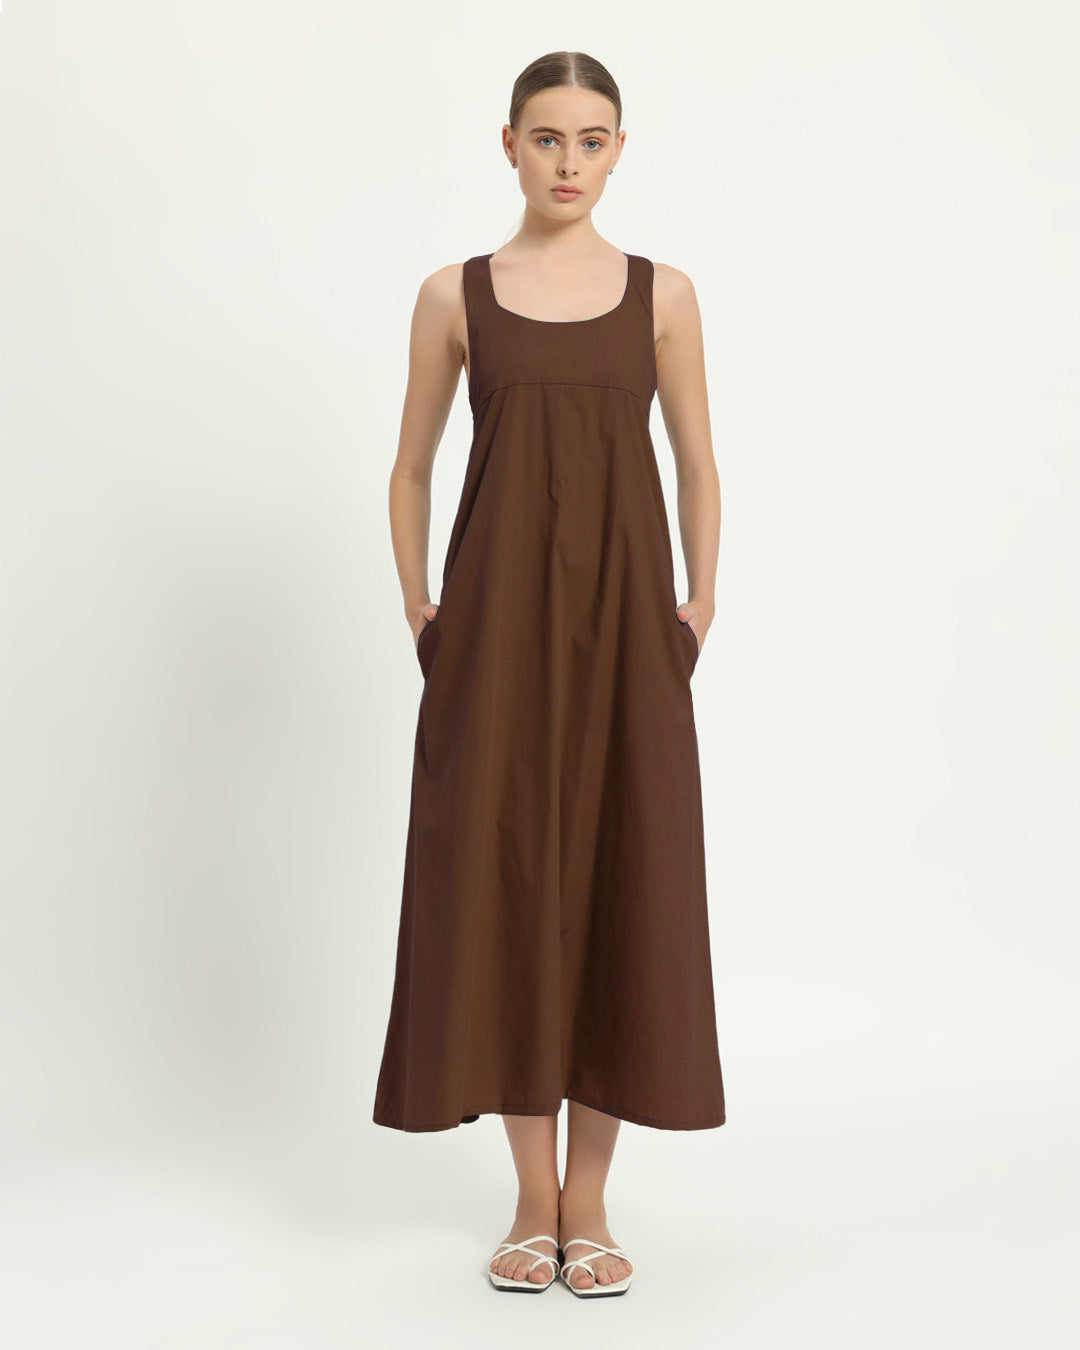 The Magdala Nutshell Cotton Dress